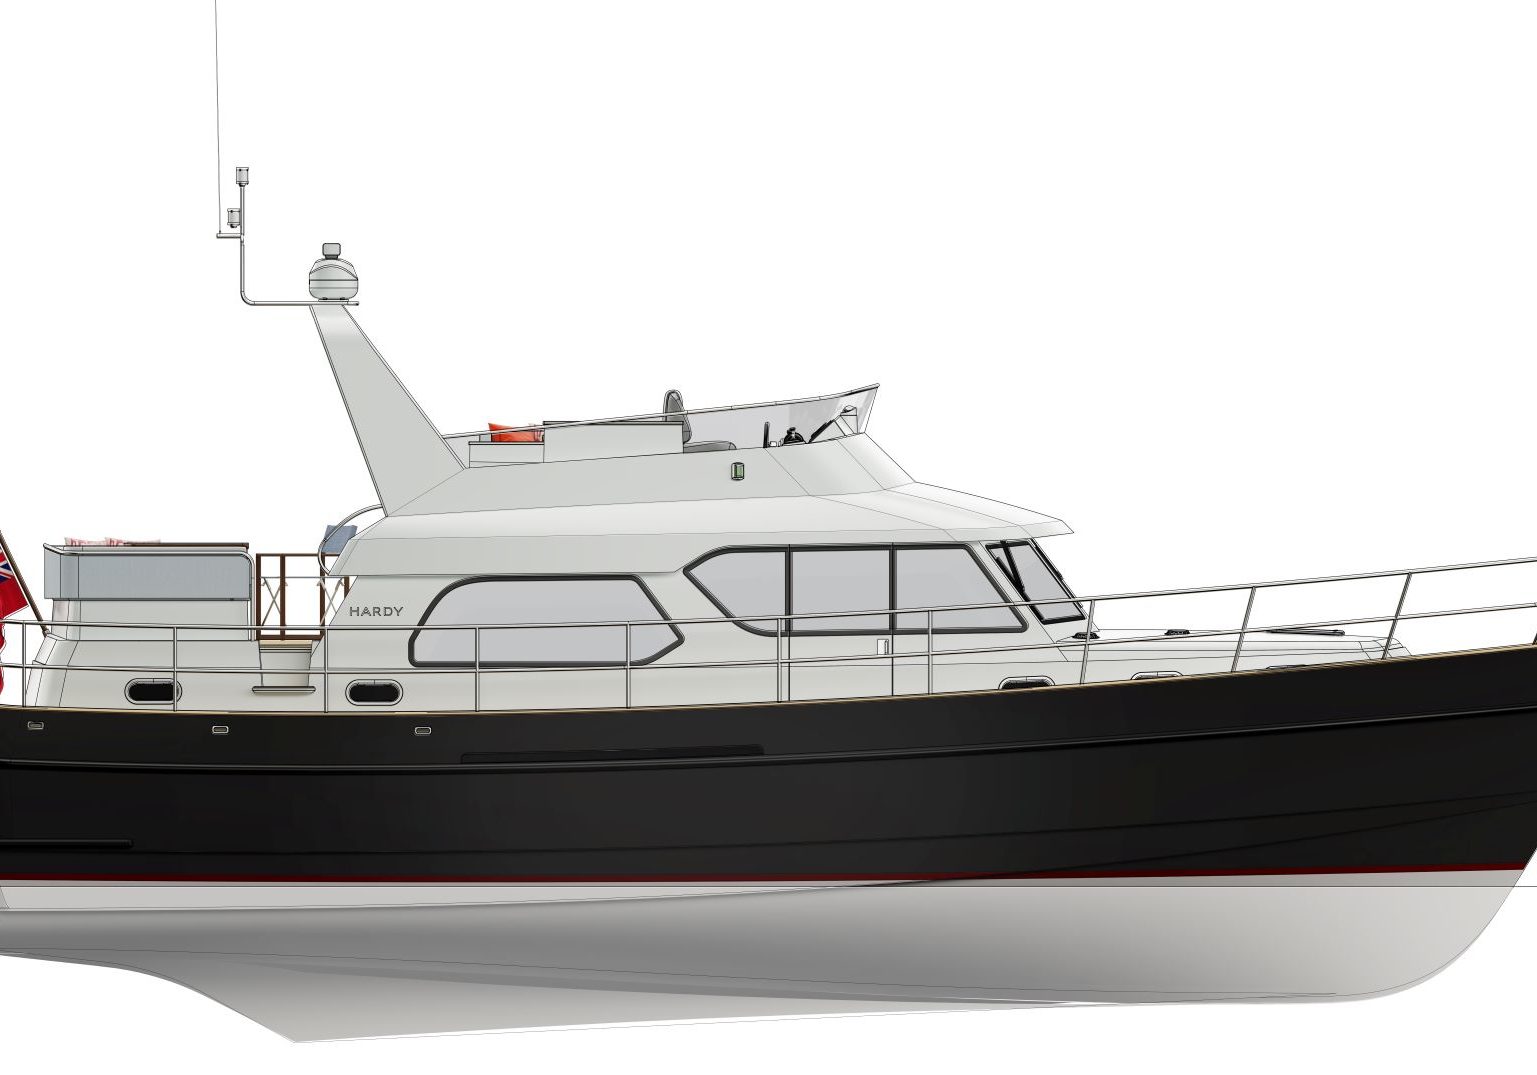 Hardy 45 profile Hardy Motor Yachts Boat Sales Sydney Davis Marine Brokerage